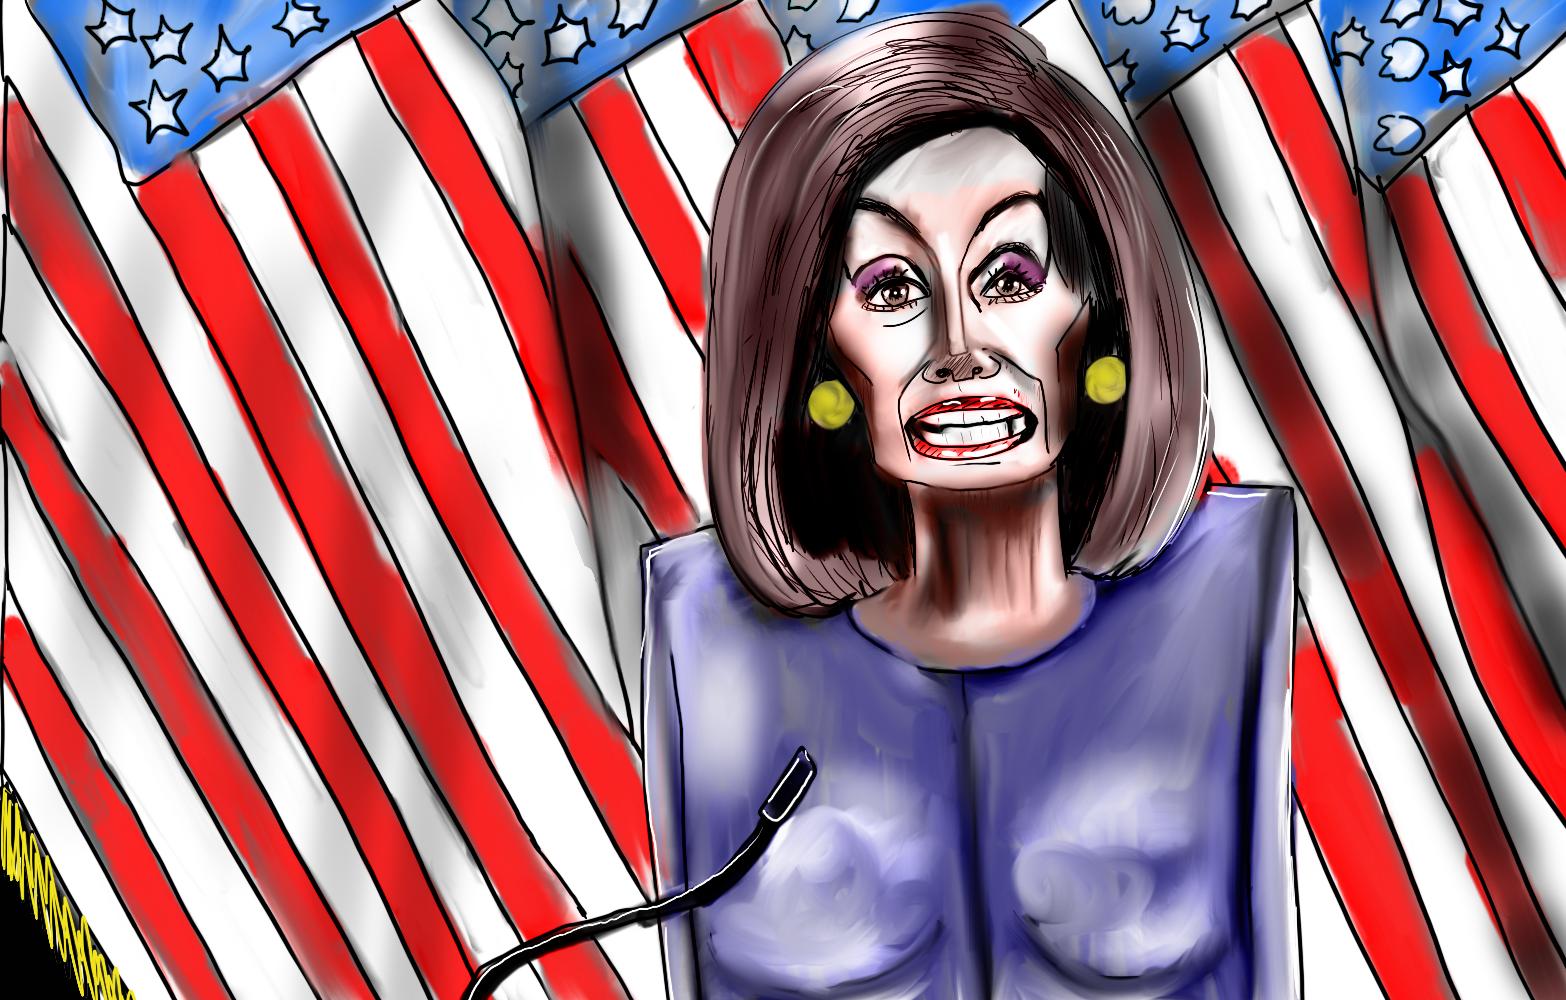 Nancy Pelosi impeachment hearing political cartoon for Donald Trump post thumbnail image